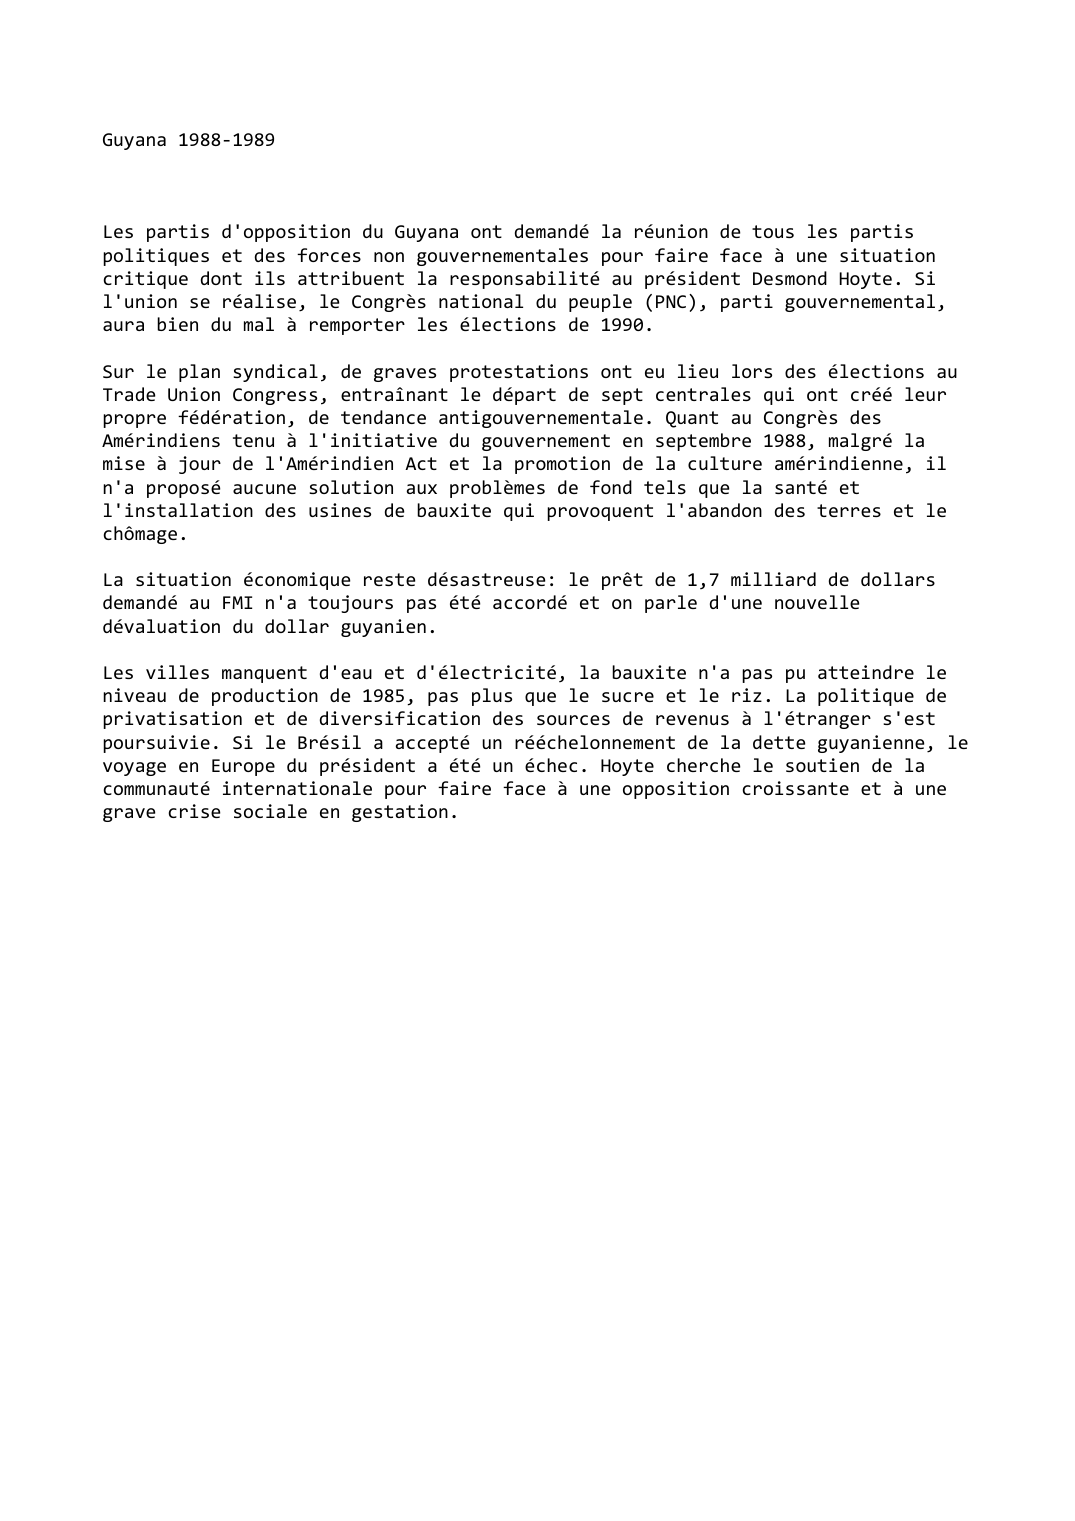 Prévisualisation du document Guyana (1988-1989)